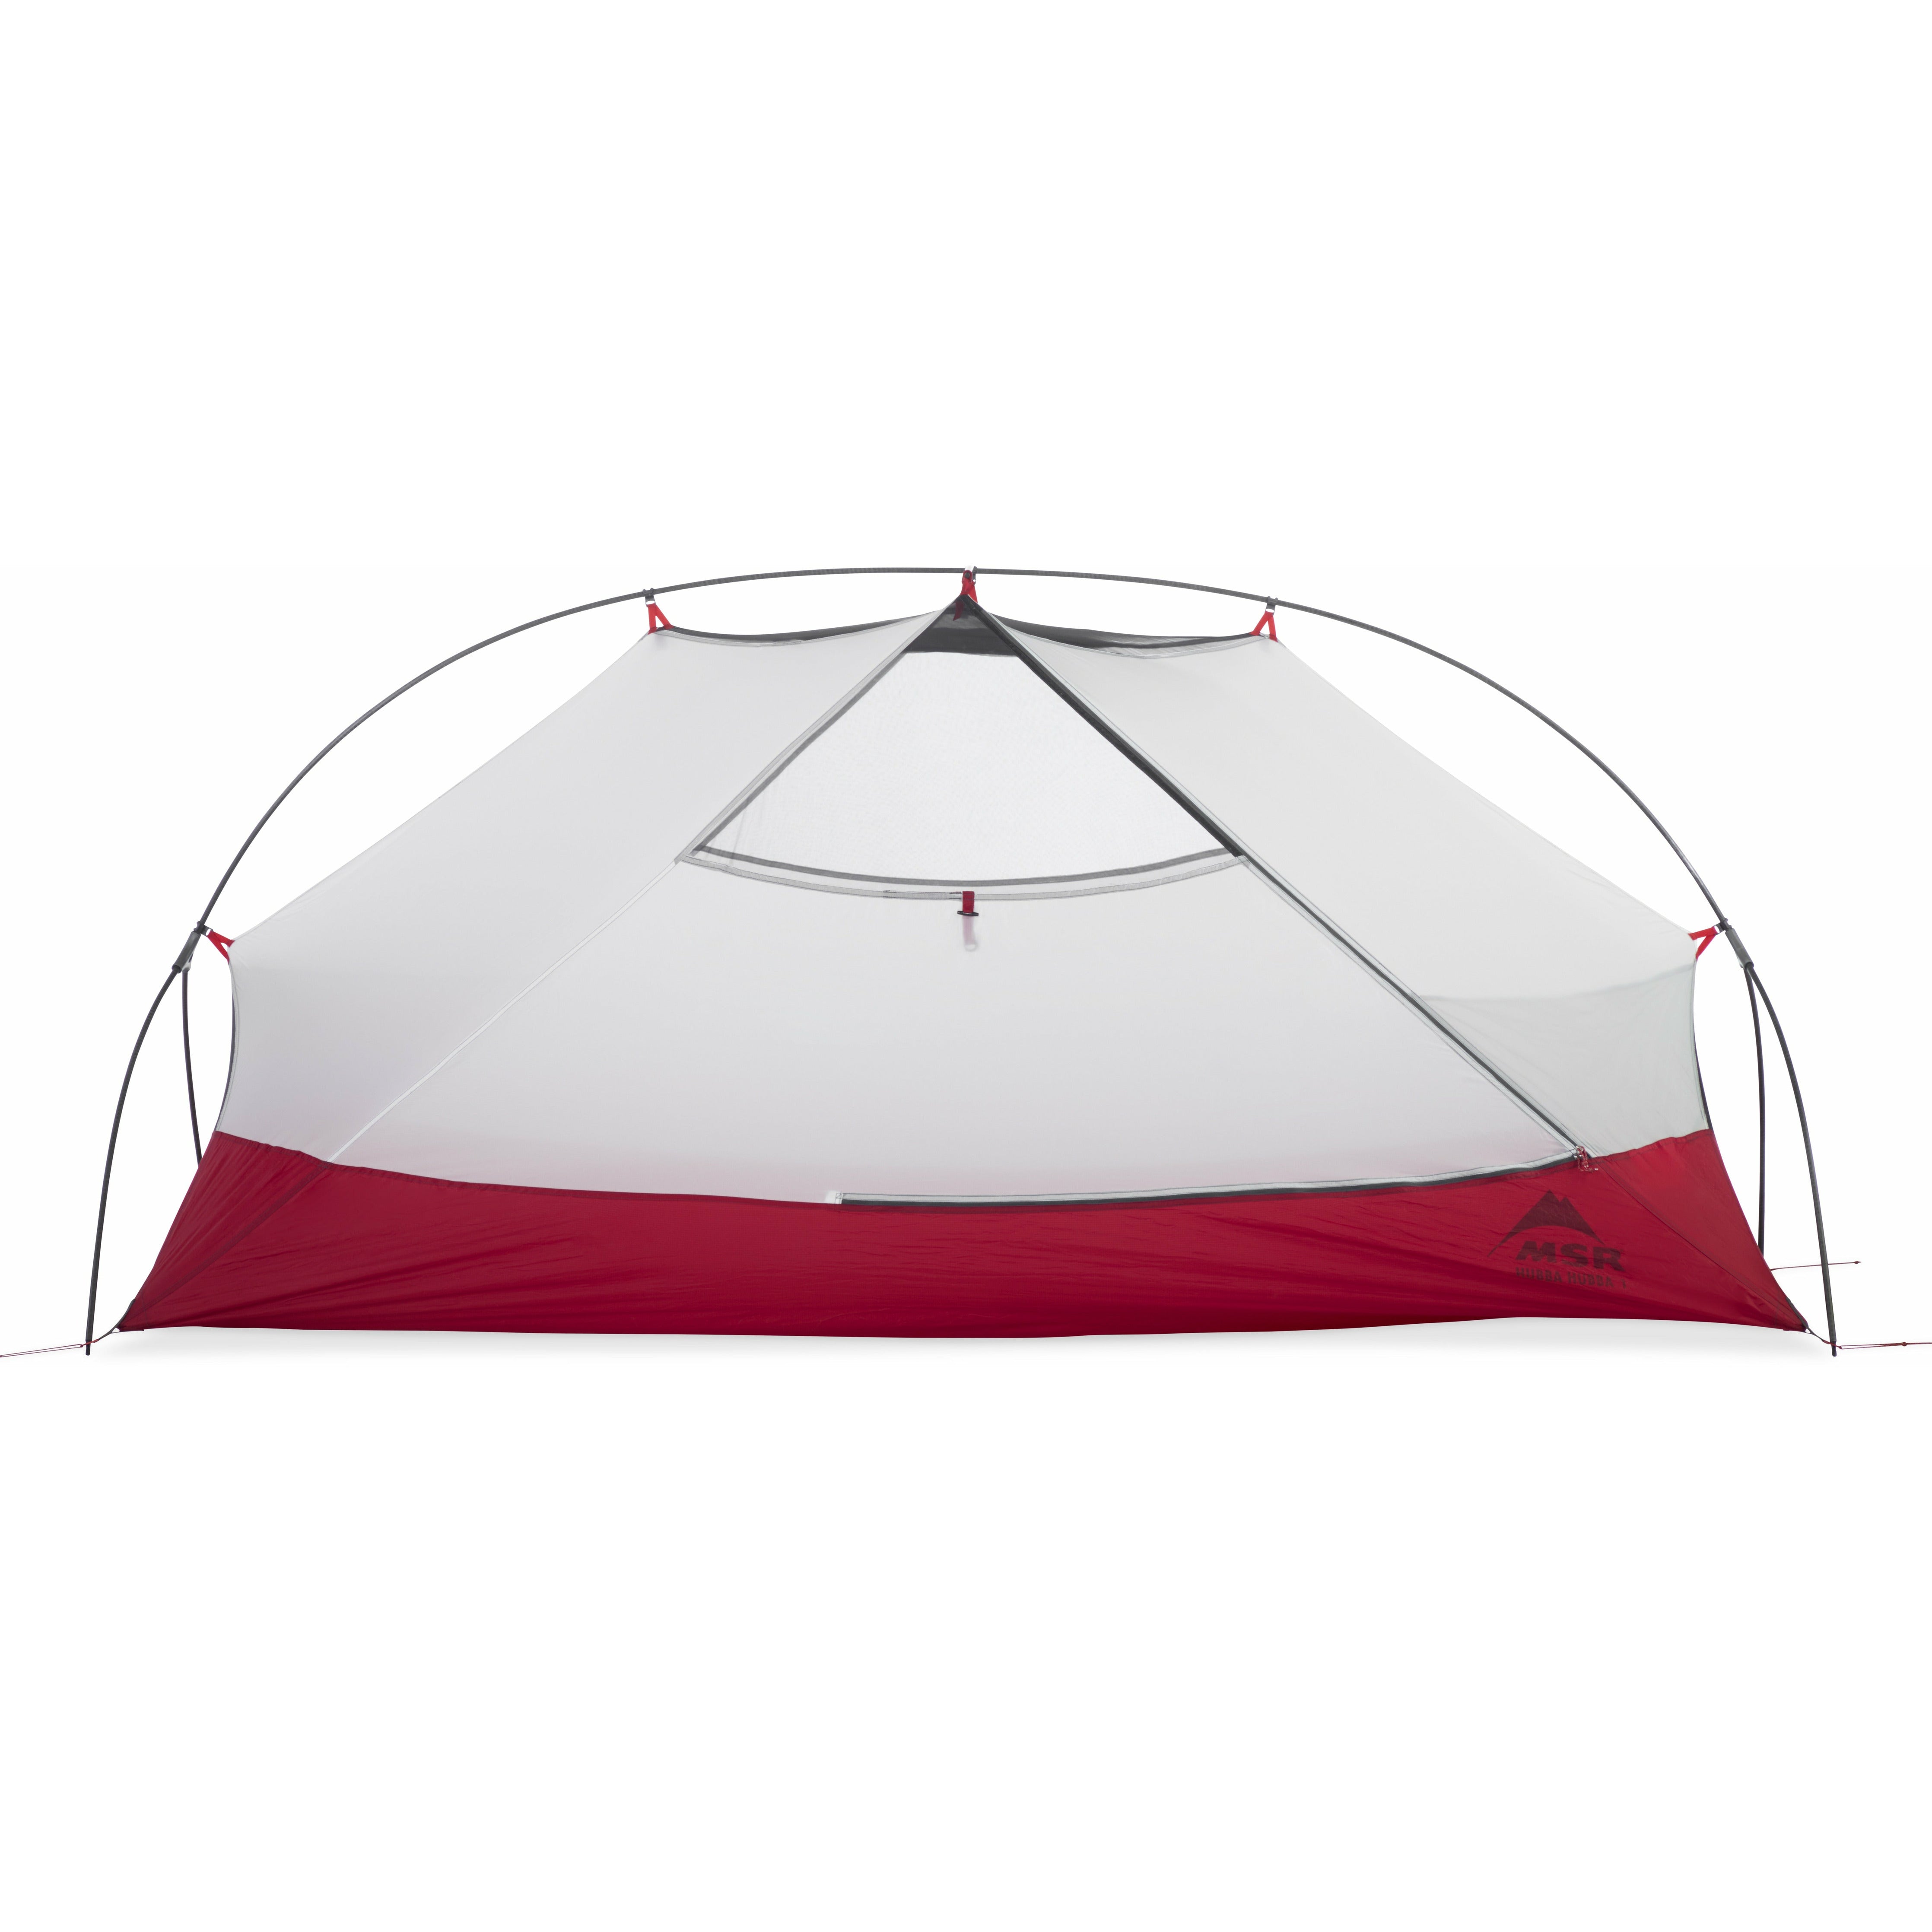 Hubba Hubba 1 - אוהל תרמילאים אולטראלייט לאדם אחד דגם 2022